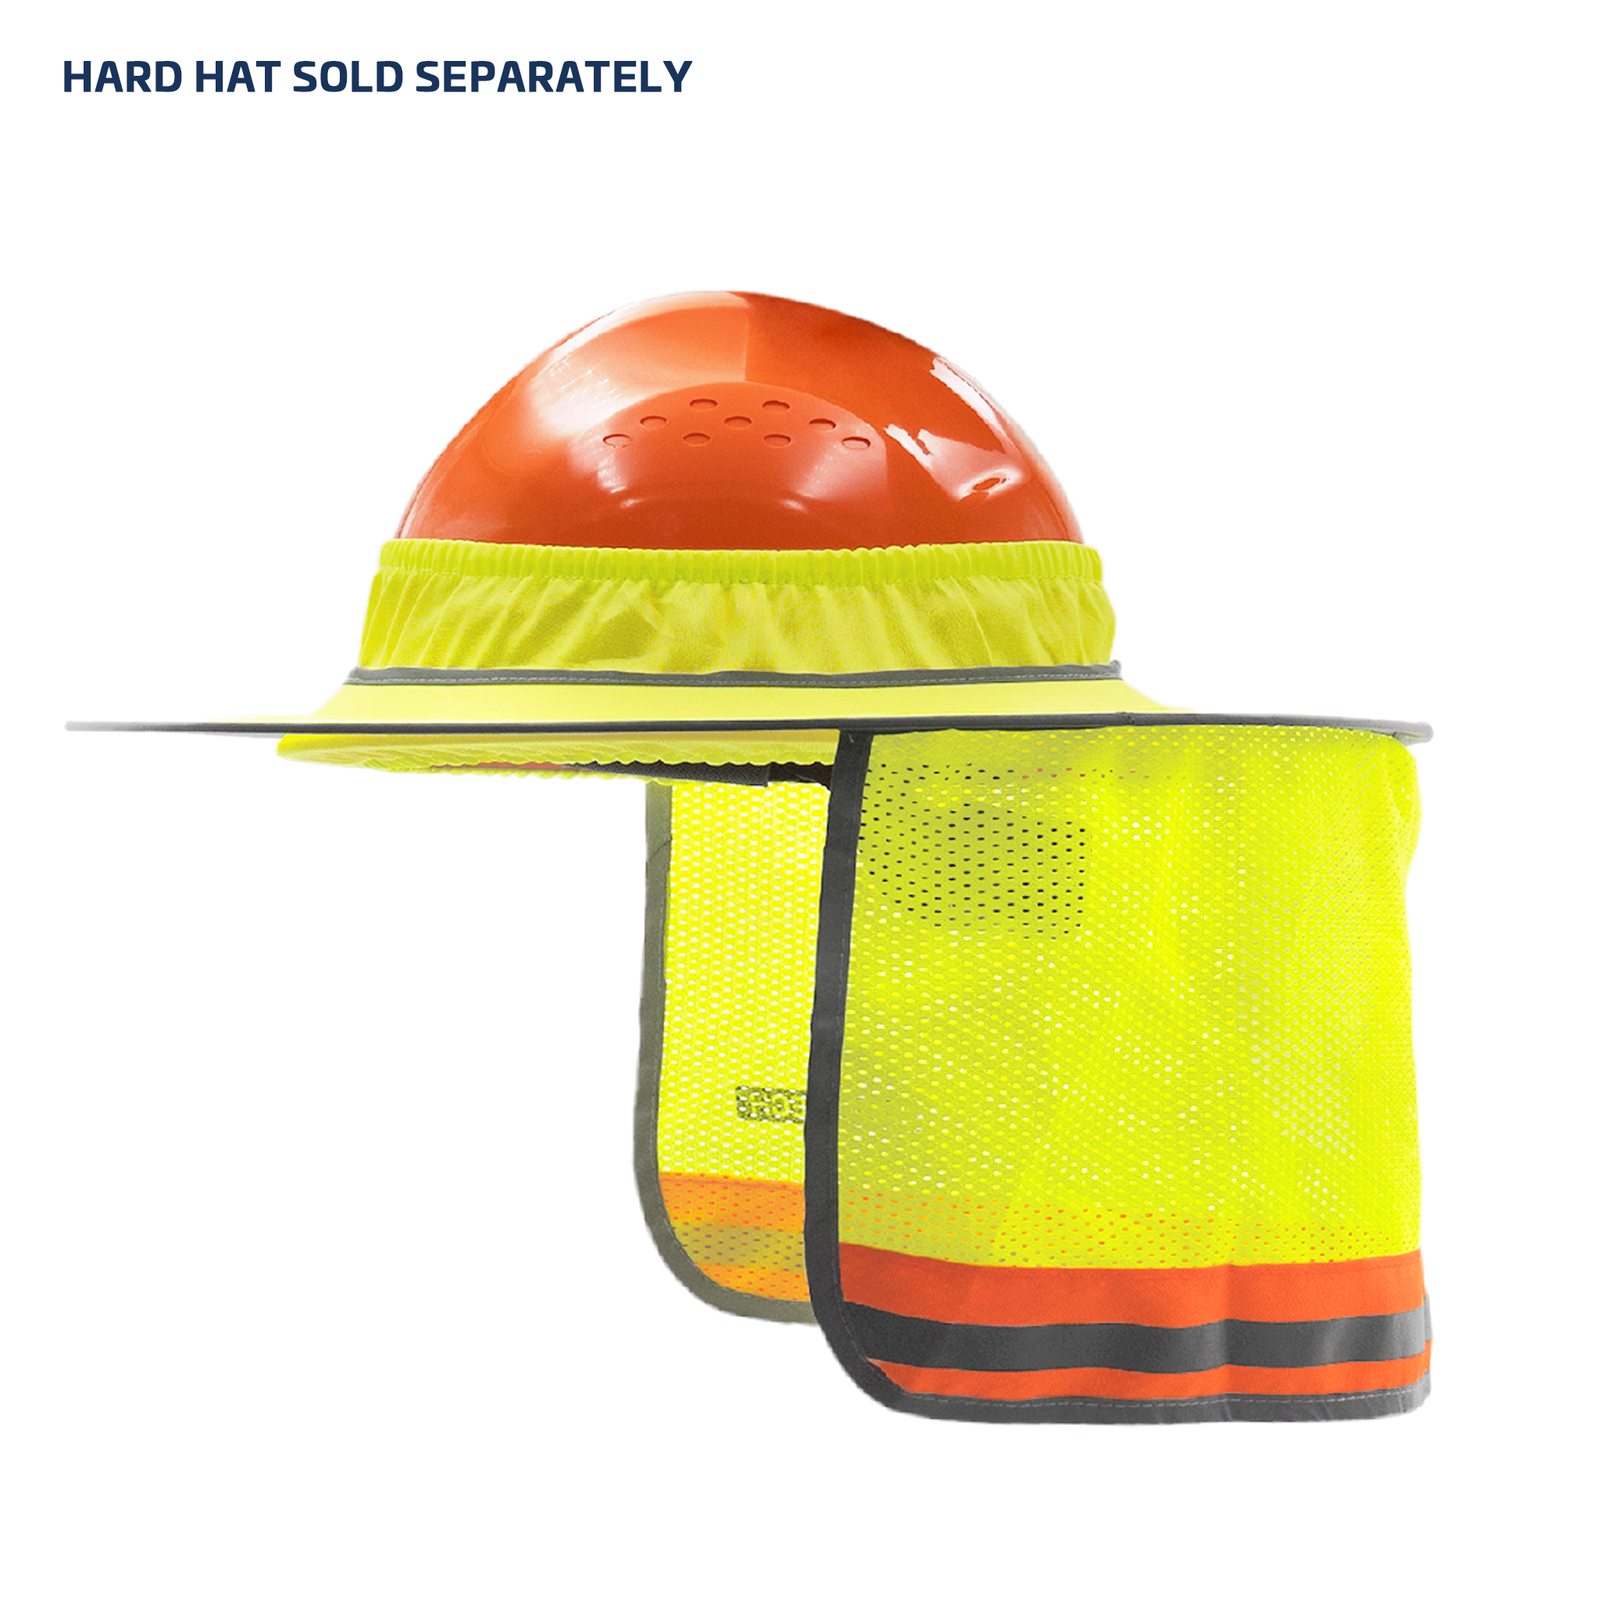 Hi-Vis Sun Shield for Full Brim Hard Hats | Technopack Safety & PPE by JORESTECH